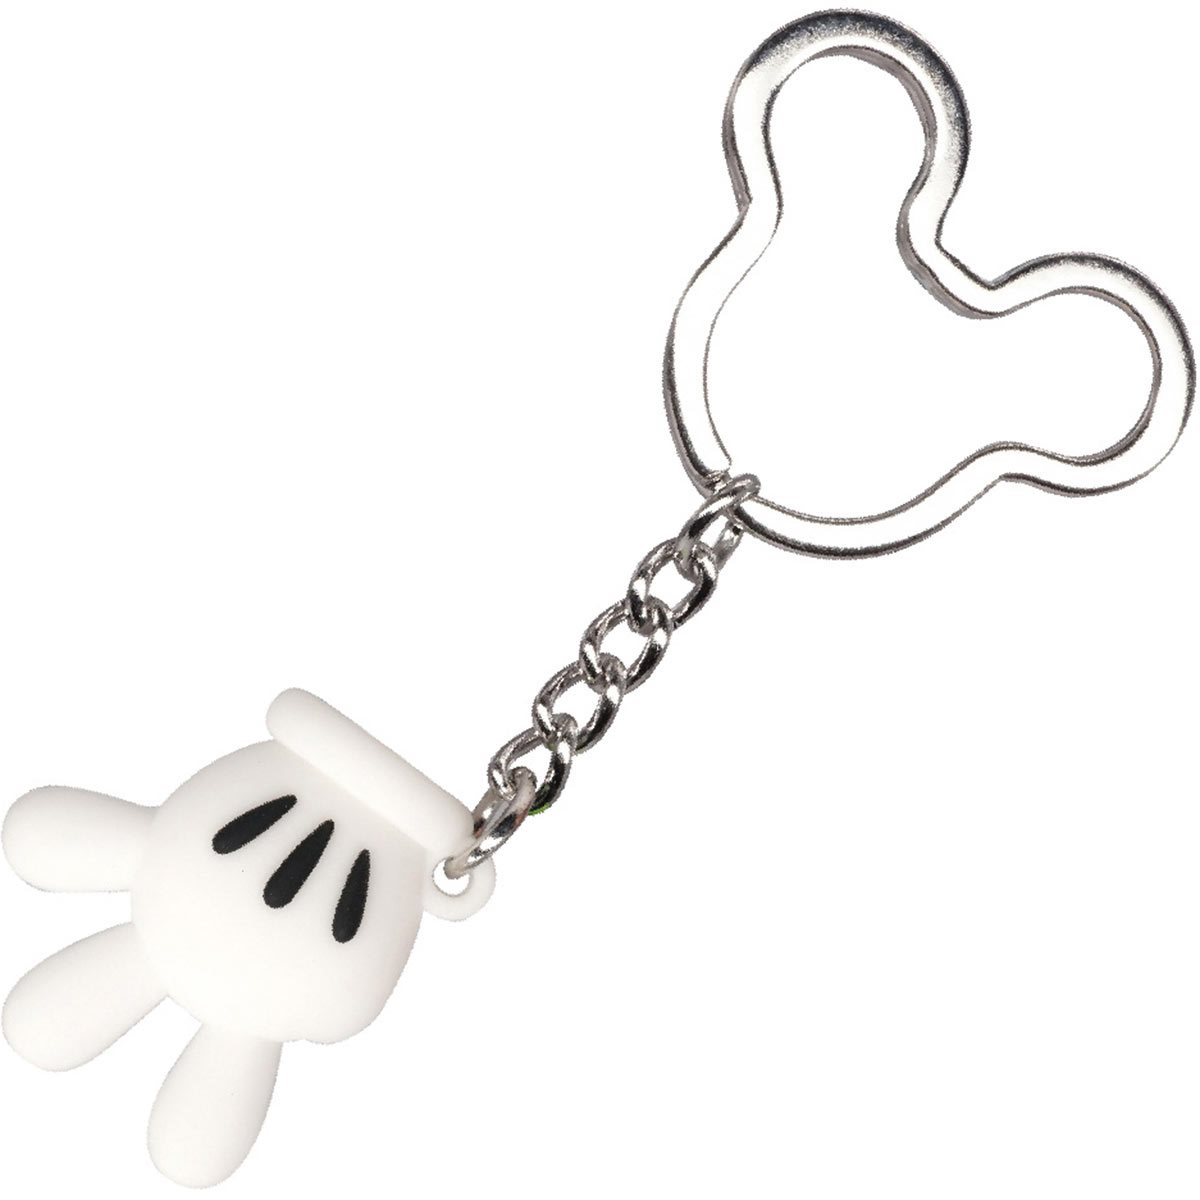 Disney Keychain Keyring - Mickey Mouse